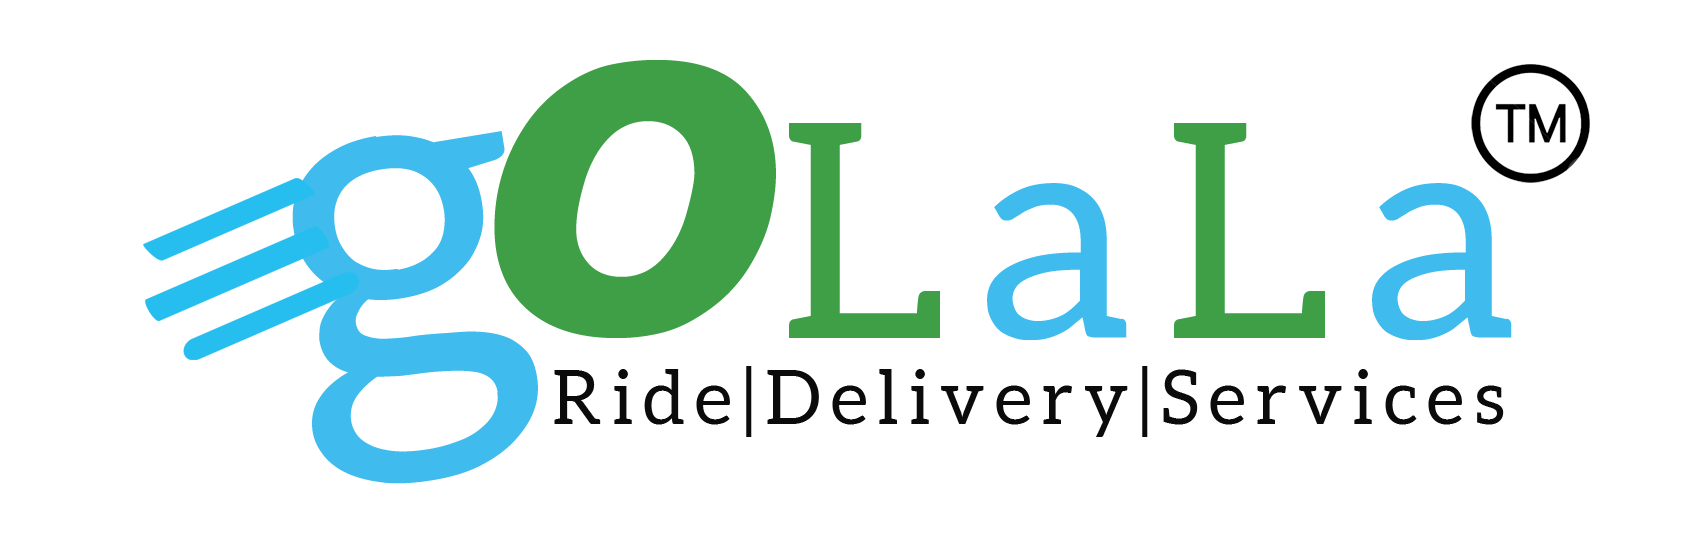 Golala-logo